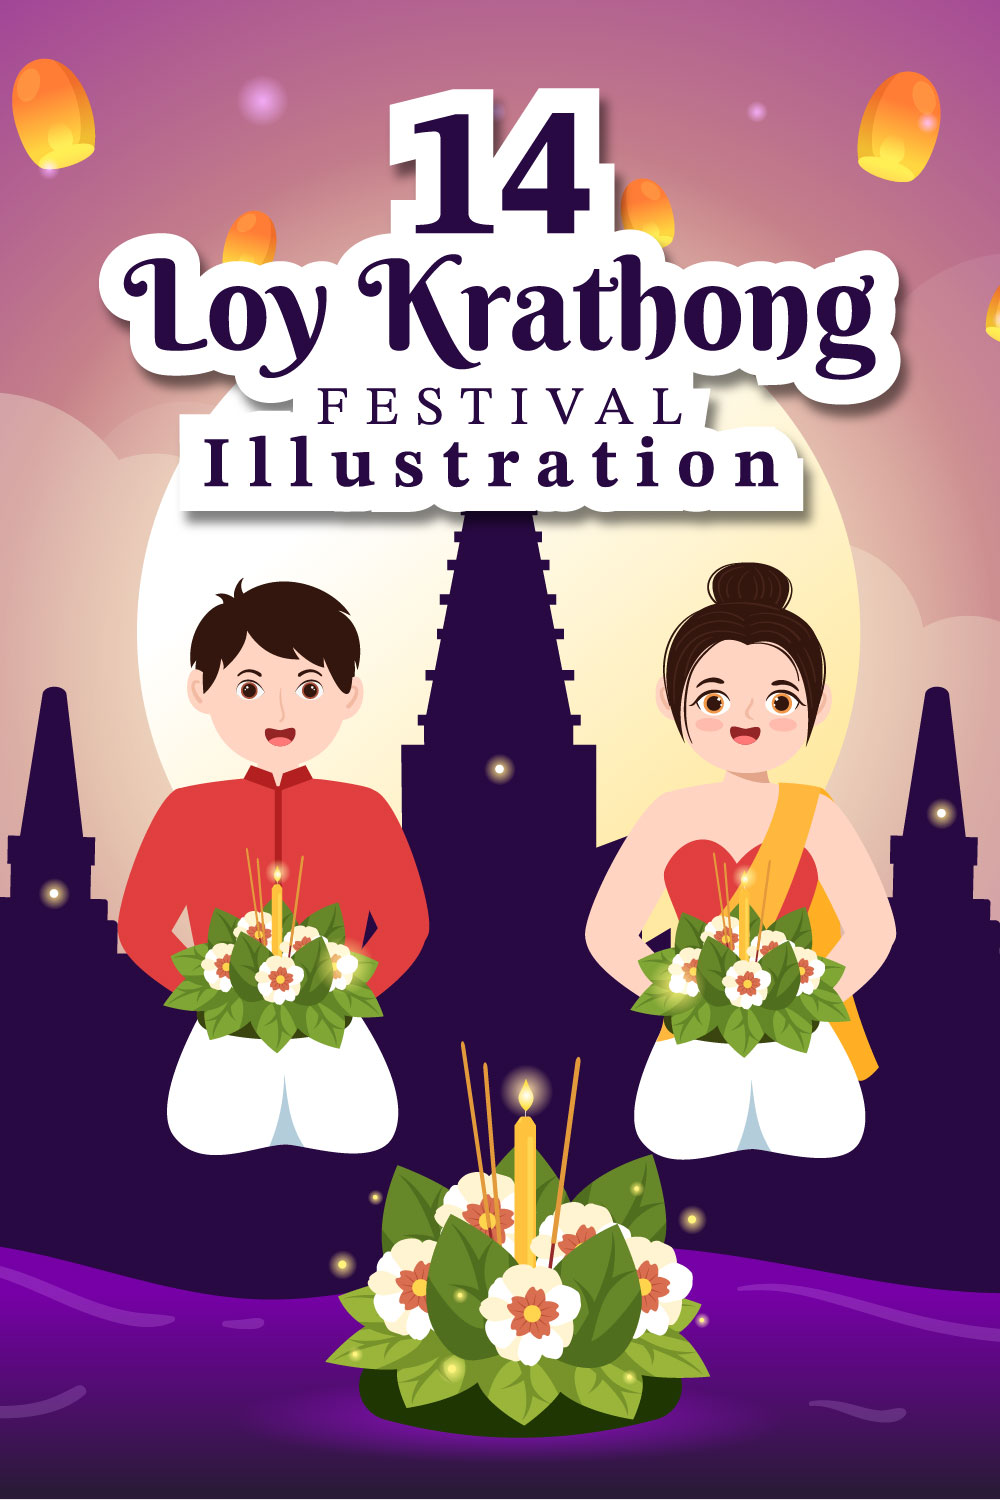 Loy Krathong Festival Illustration Pinterest image.